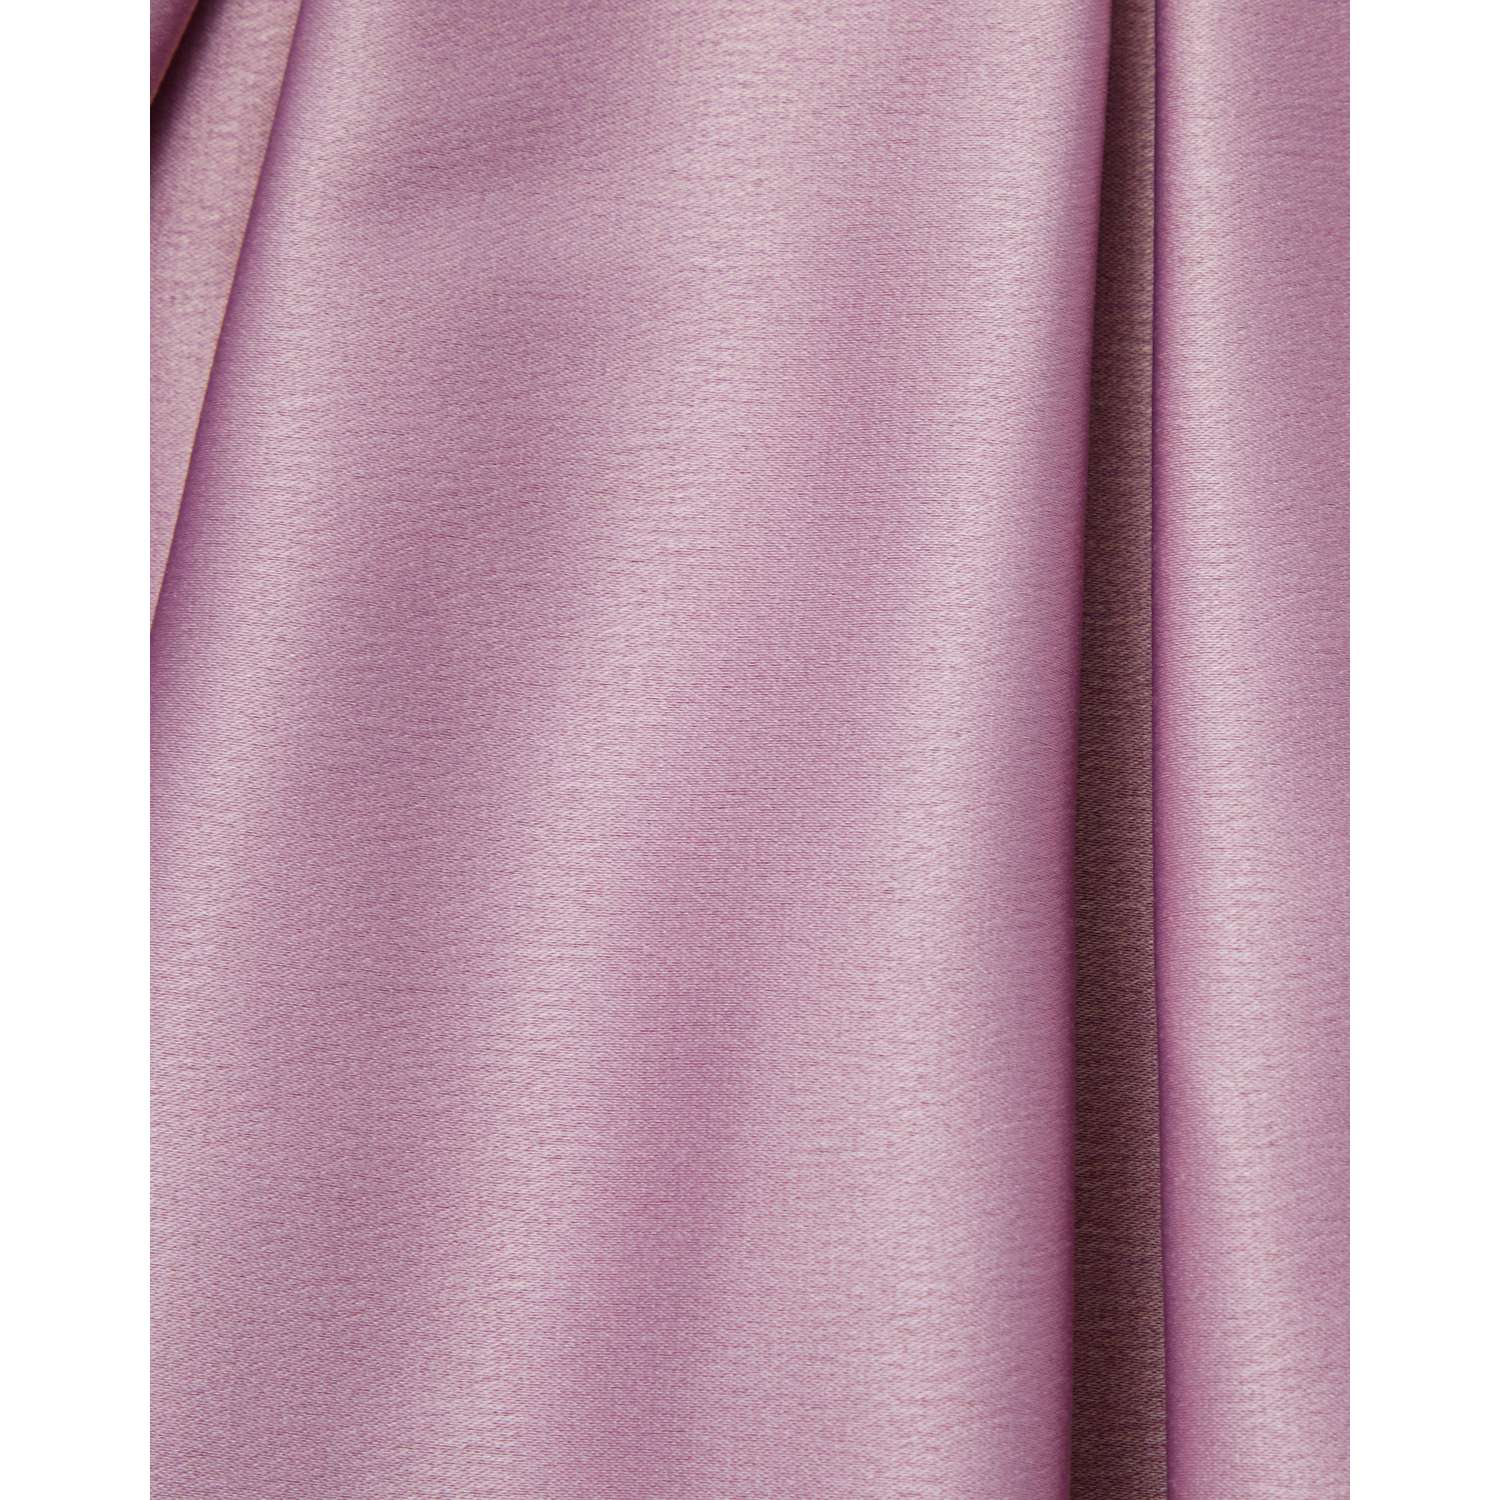 Платье Jerry Berry dress_bows_pink - фото 2